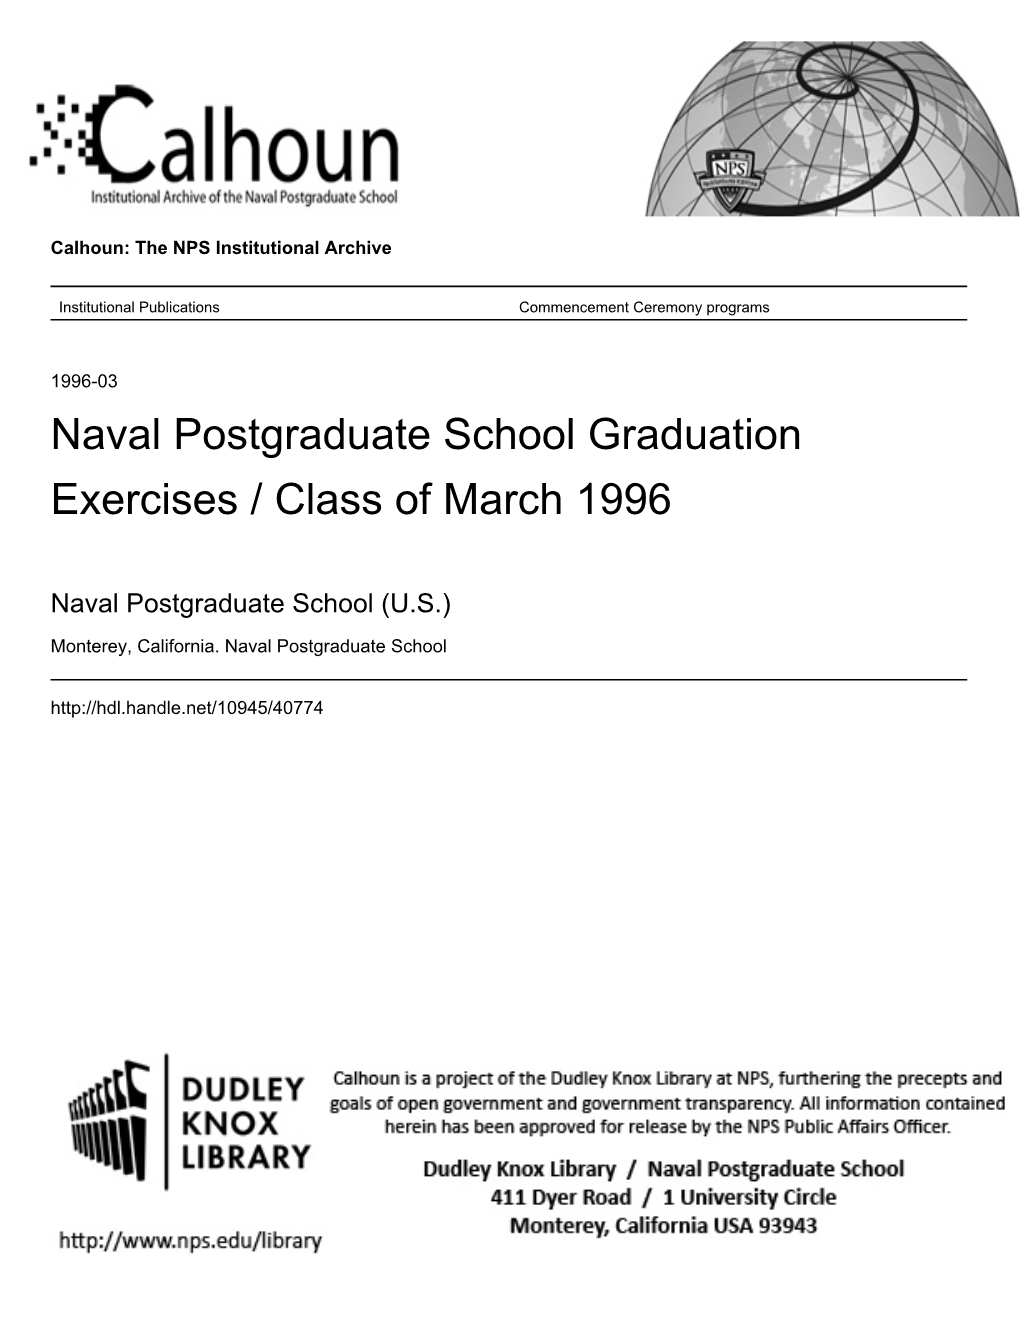 Naval Postgraduate School Graduation Exercises / Class of March 1996